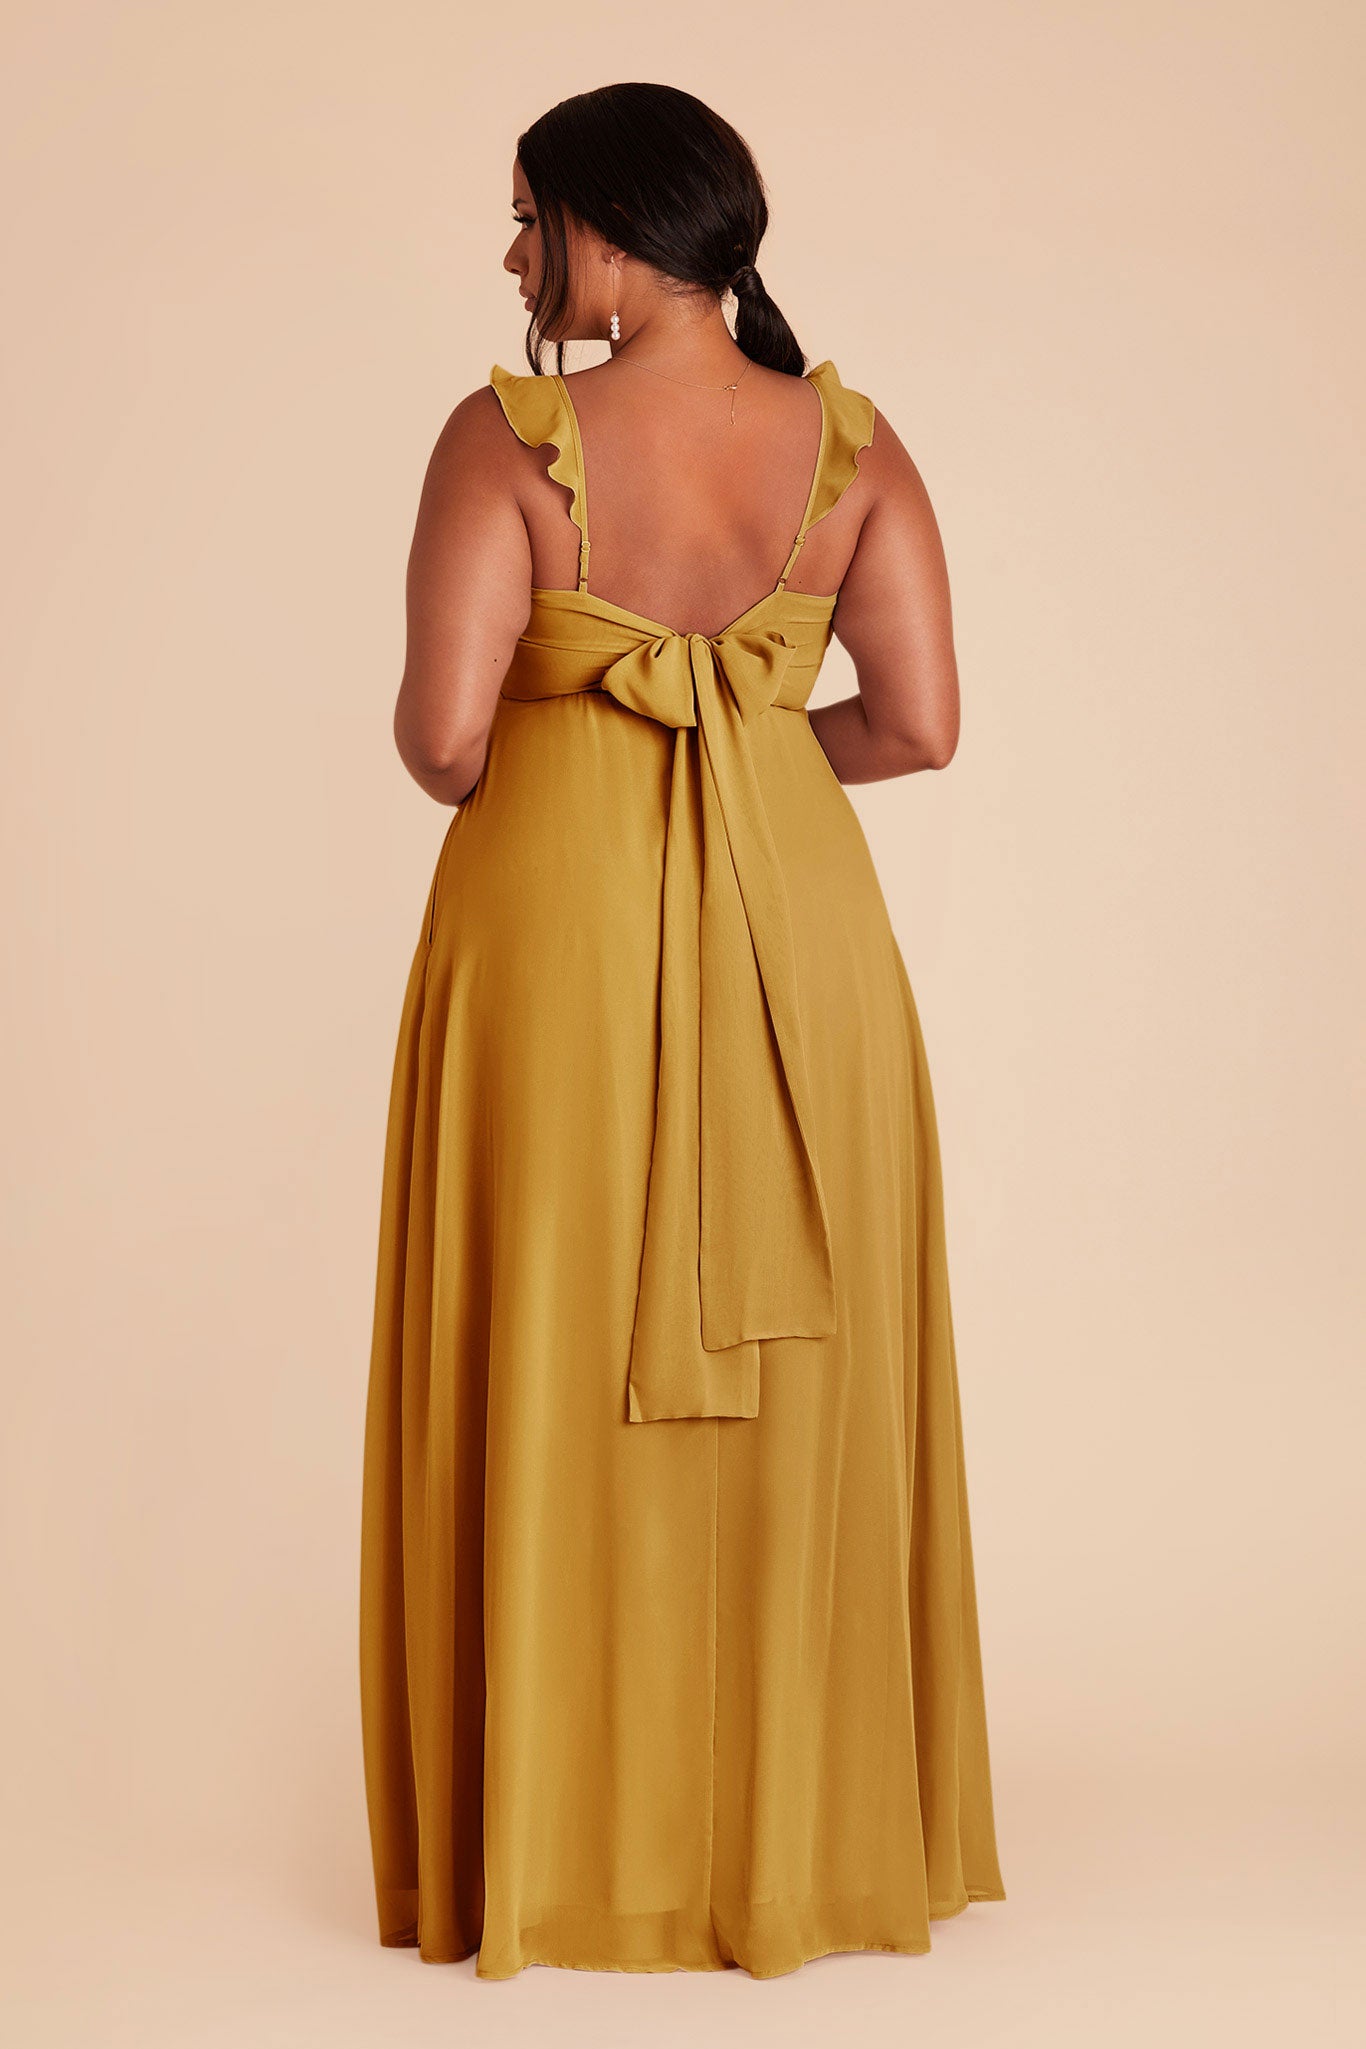 Marigold Doris Chiffon Dress by Birdy Grey